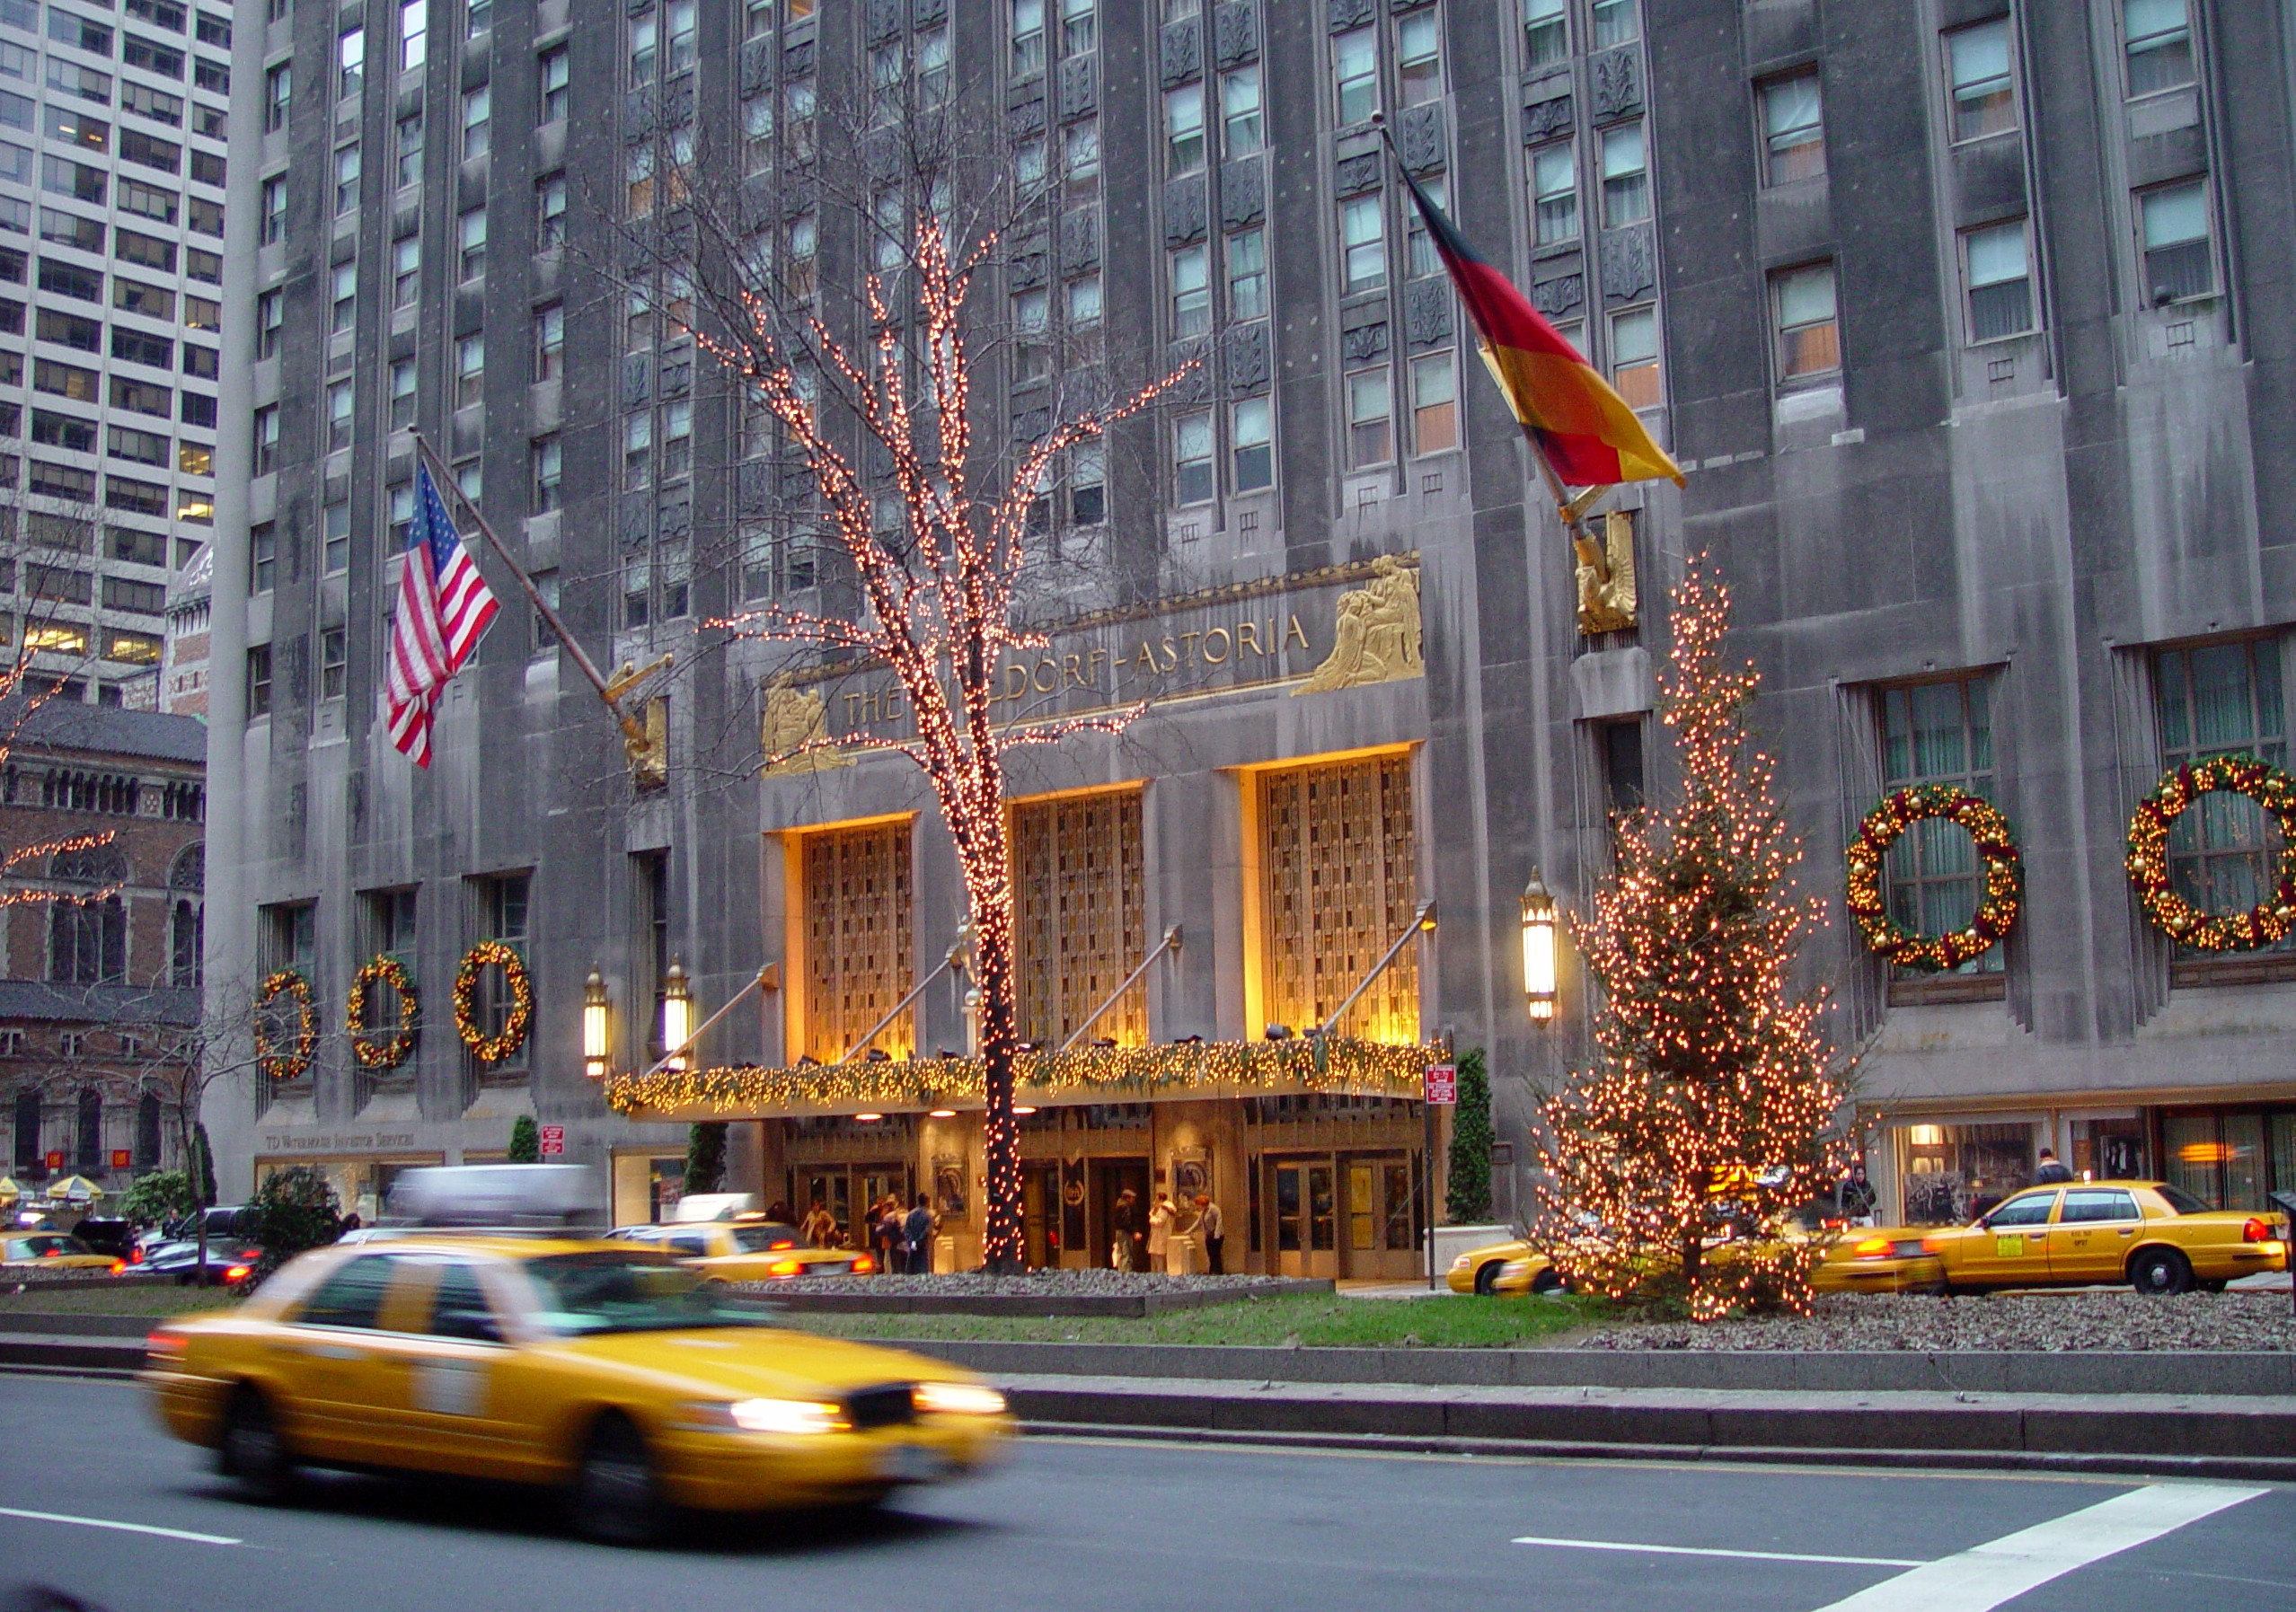 Park Avenue entrance to the Waldorf-Astoria Hotel. Credit: <a href="https://www.flickr.com/photos/37244380@N00/299419228/in/photolist-ssAUu-93X75k-8vKpEF-8vNrCq-7kW4qn-NF3v9-sb3ug6-sqcQh3-oyYxpG-rkR8Su-8vKpQv-4ks2JE-4JkfJU-c1fqC3-8vNrMu-7j6gAE-o66CTQ-sJUnB-5DoLMs-6c12e6-9SAhj6-dtKAfB-7mpo1V-d7LcgA-9n6ez8-eKzzq8-ny8ogL-nAbVcp-45QGKH-45Jkm-2weJN5-NFtb8-dtKALV-8vNrcE-NFtSt-bmnVdd-aCv8nJ-85PDWE-rBJf6-NFv3Z-dtR9Df-wfbe7m-a2YRAB-8vKpMx-skP5r-eKzzP8-iTP3Aj-r98riE-eKzzAr-dtR9L3">cogito ergo imago/Flickr</a>